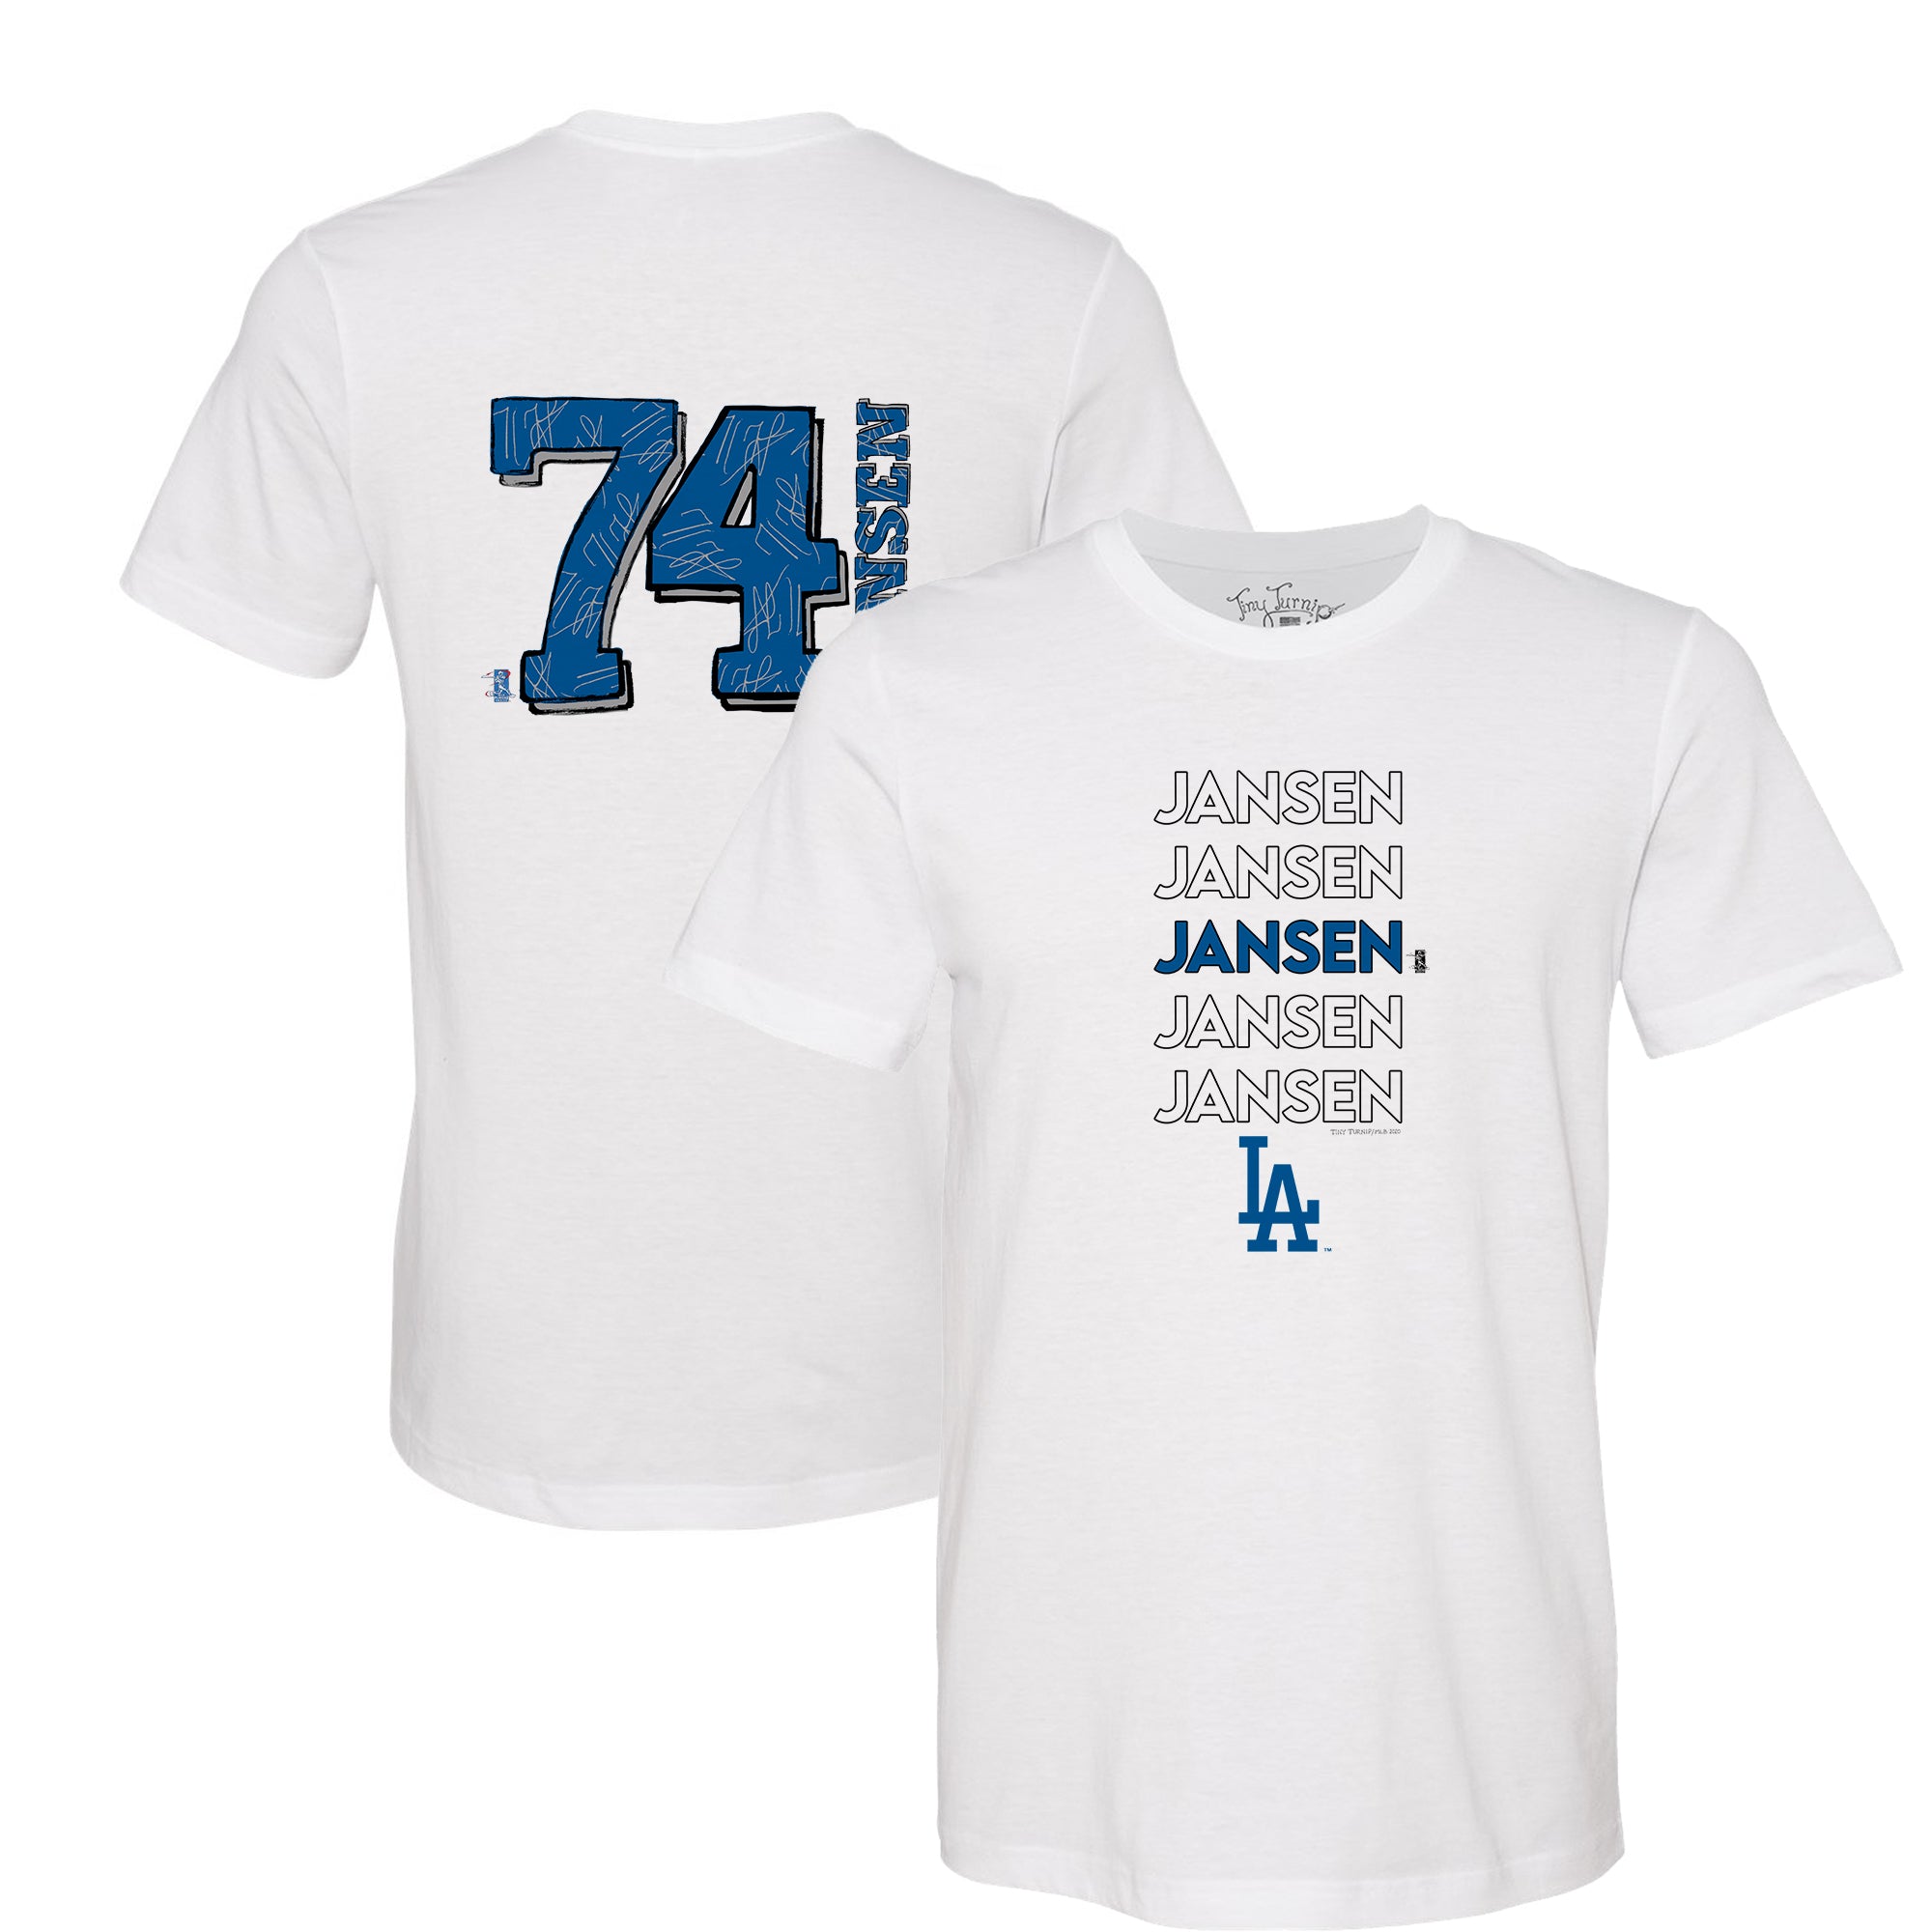 Los Angeles Dodgers Kenley Jansen Stacked Tee Shirt